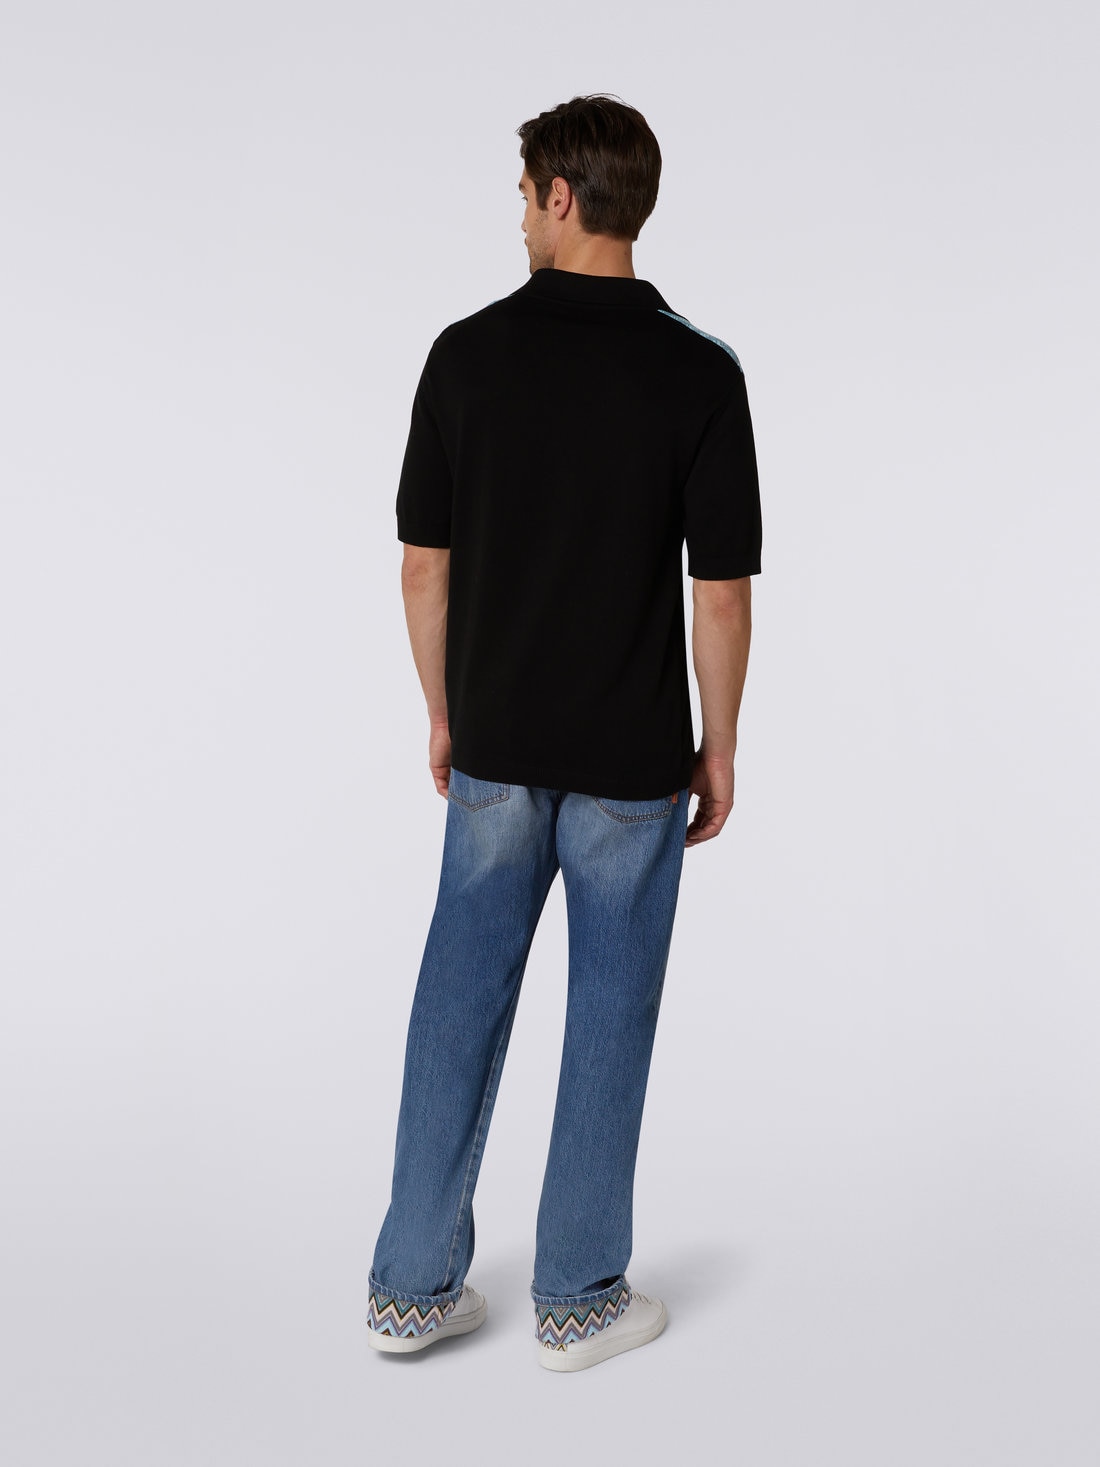 Cotton and silk short-sleeved polo shirt, Black & Blue - US23S207BK021XS91DV - 3